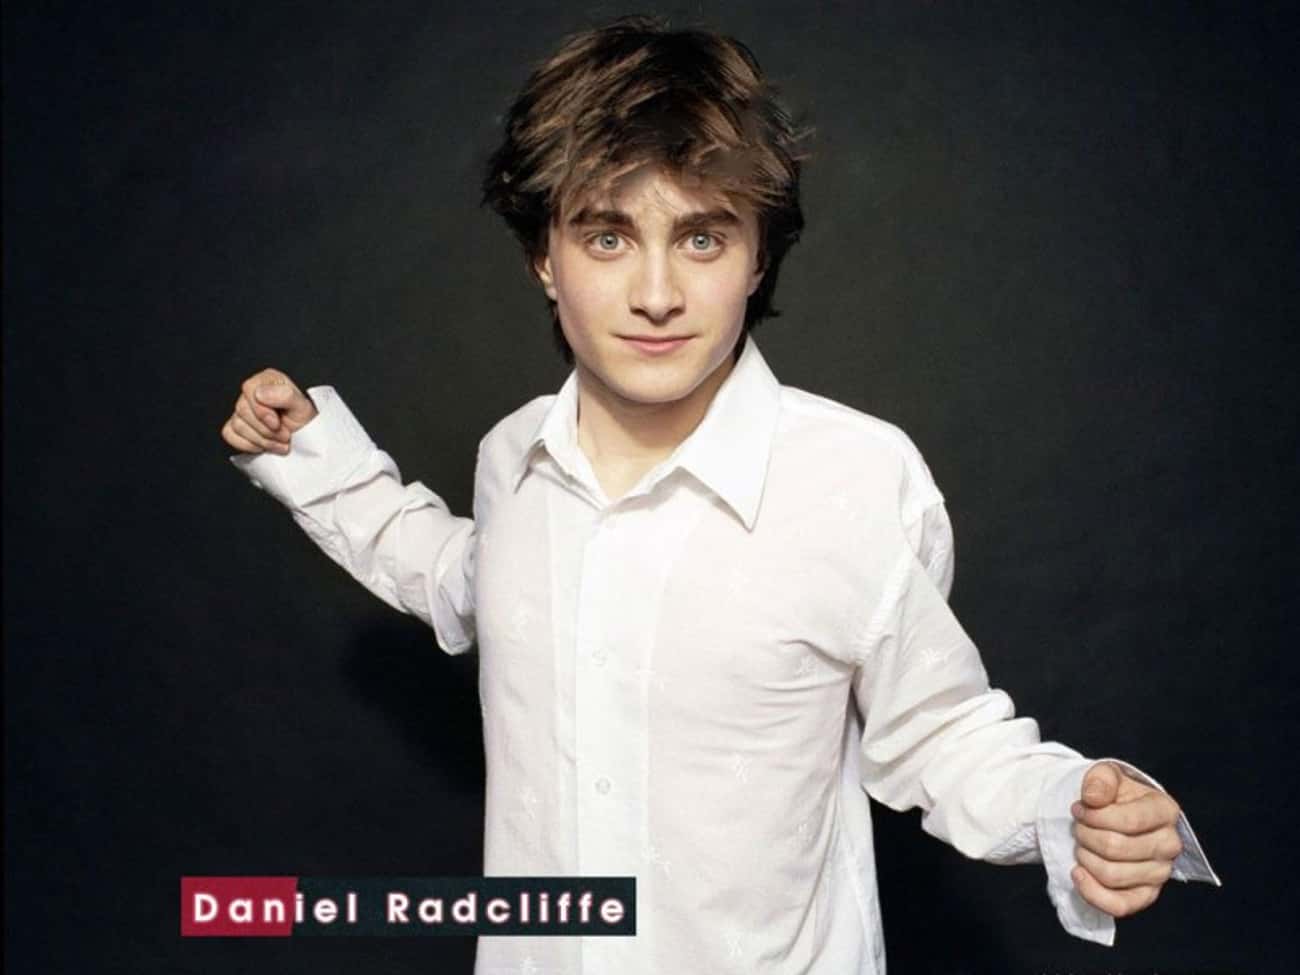 Daniel Radcliffe in Solid White Spread Collar Shirt